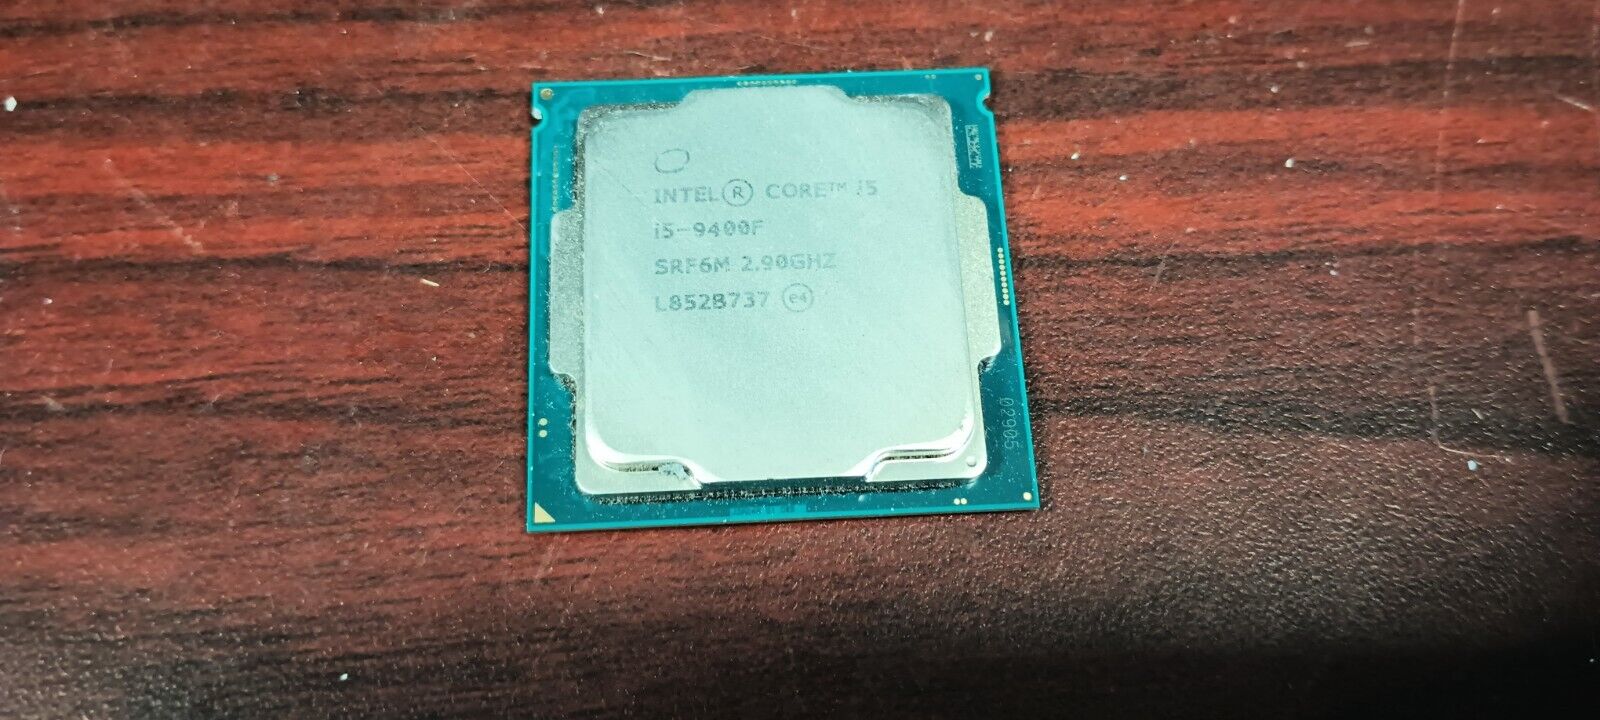 Intel Core i5-9400F 2.90GHz 9MB Six-Core LGA 1151/Socket H4 CPU SRF6M #95